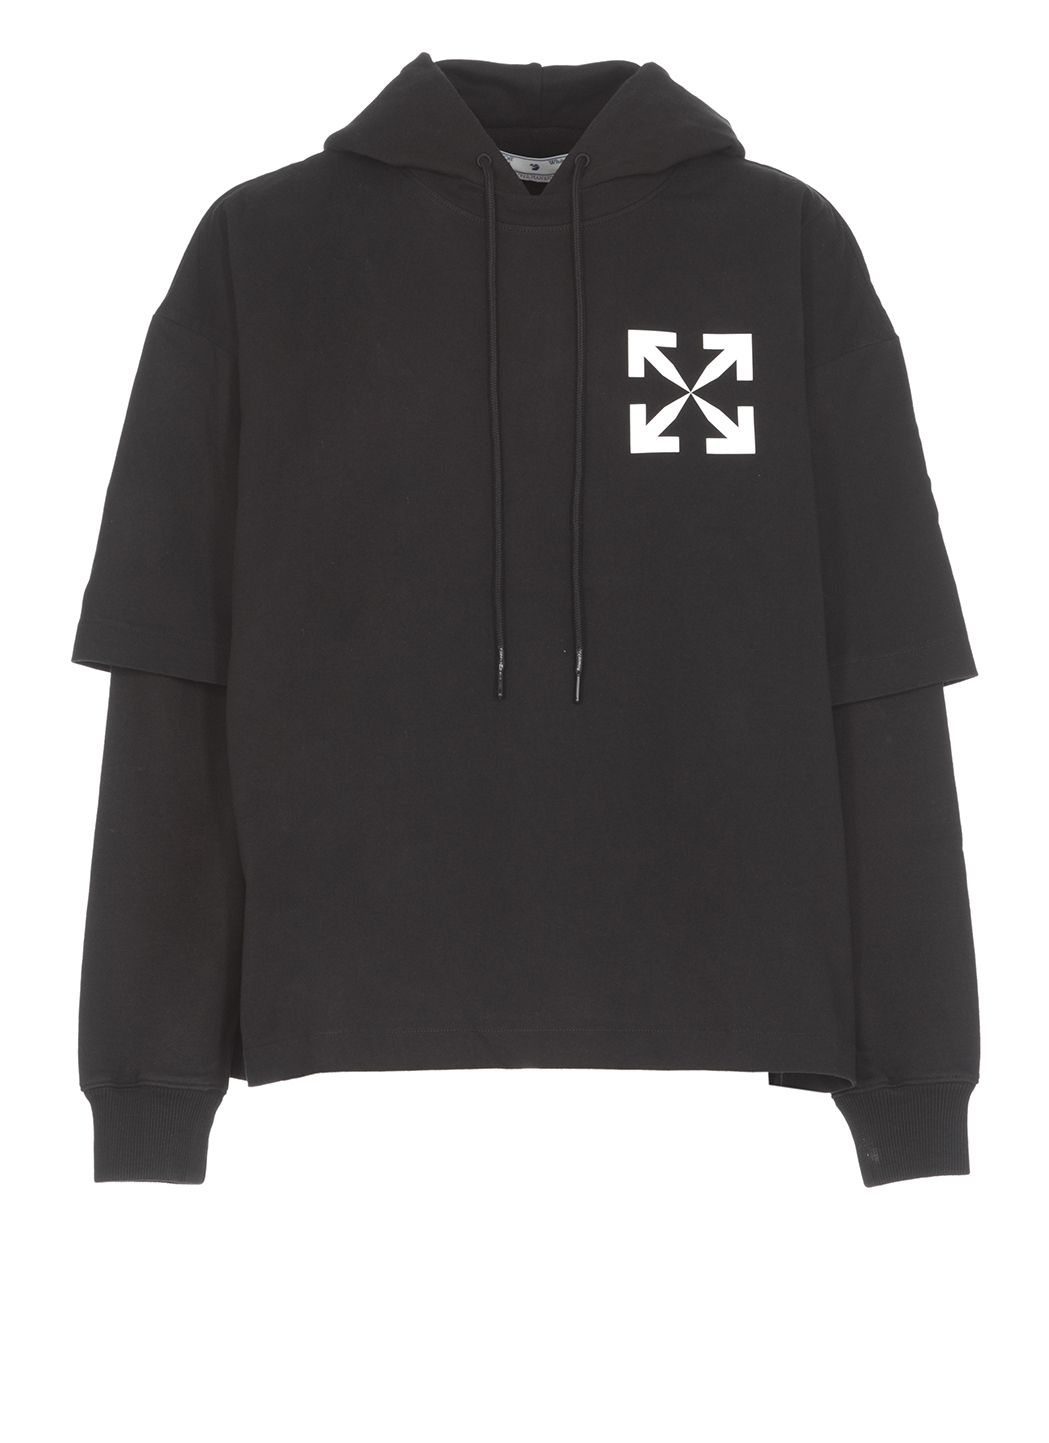 Single Arrow hoodie